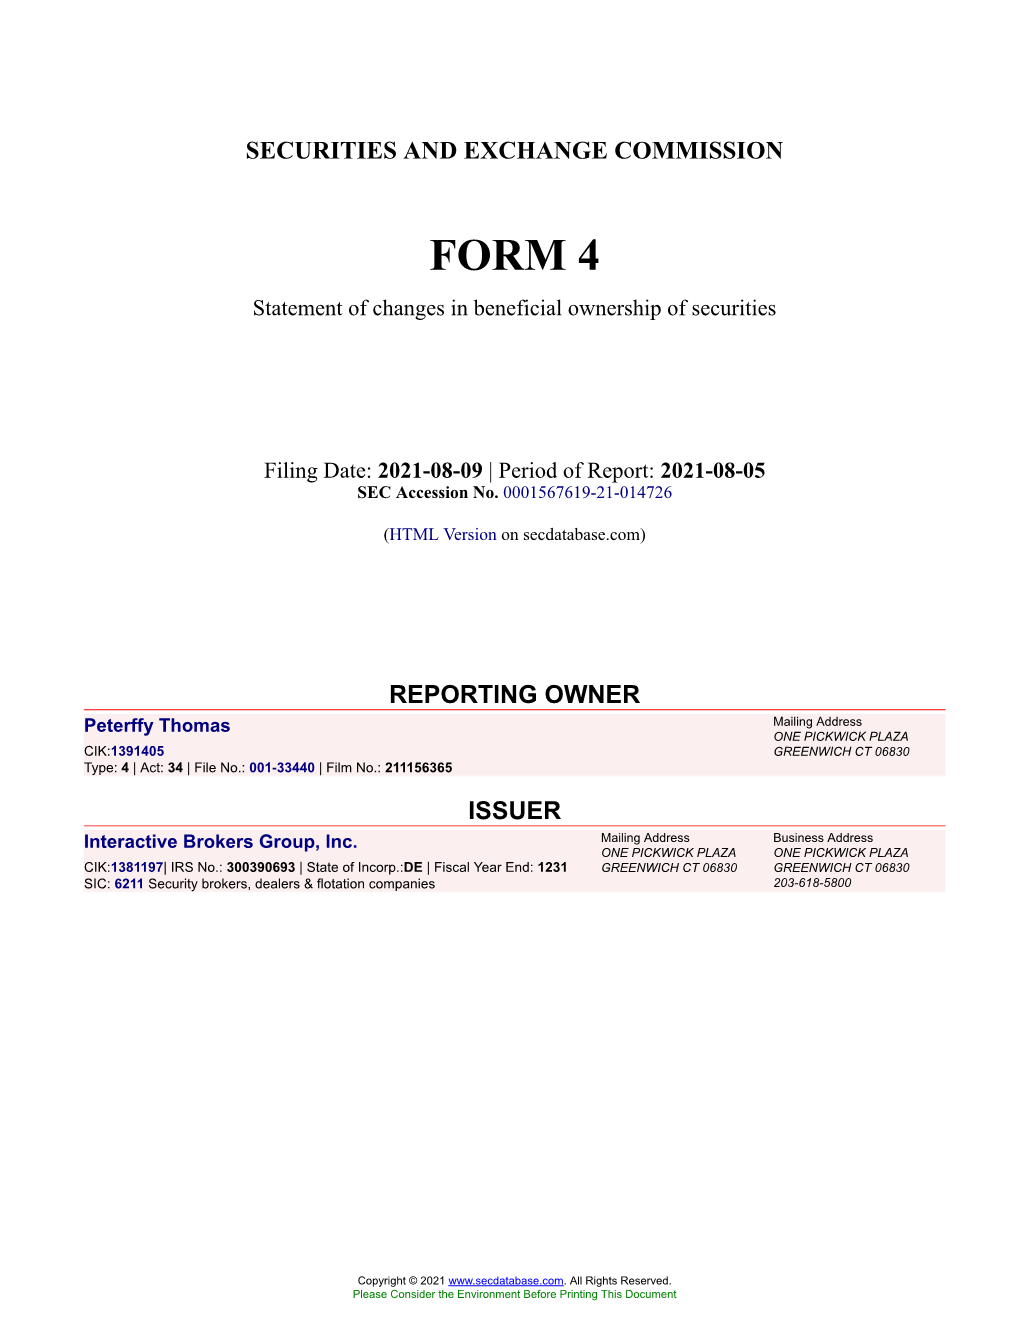 Peterffy Thomas Form 4 Filed 2021-08-09